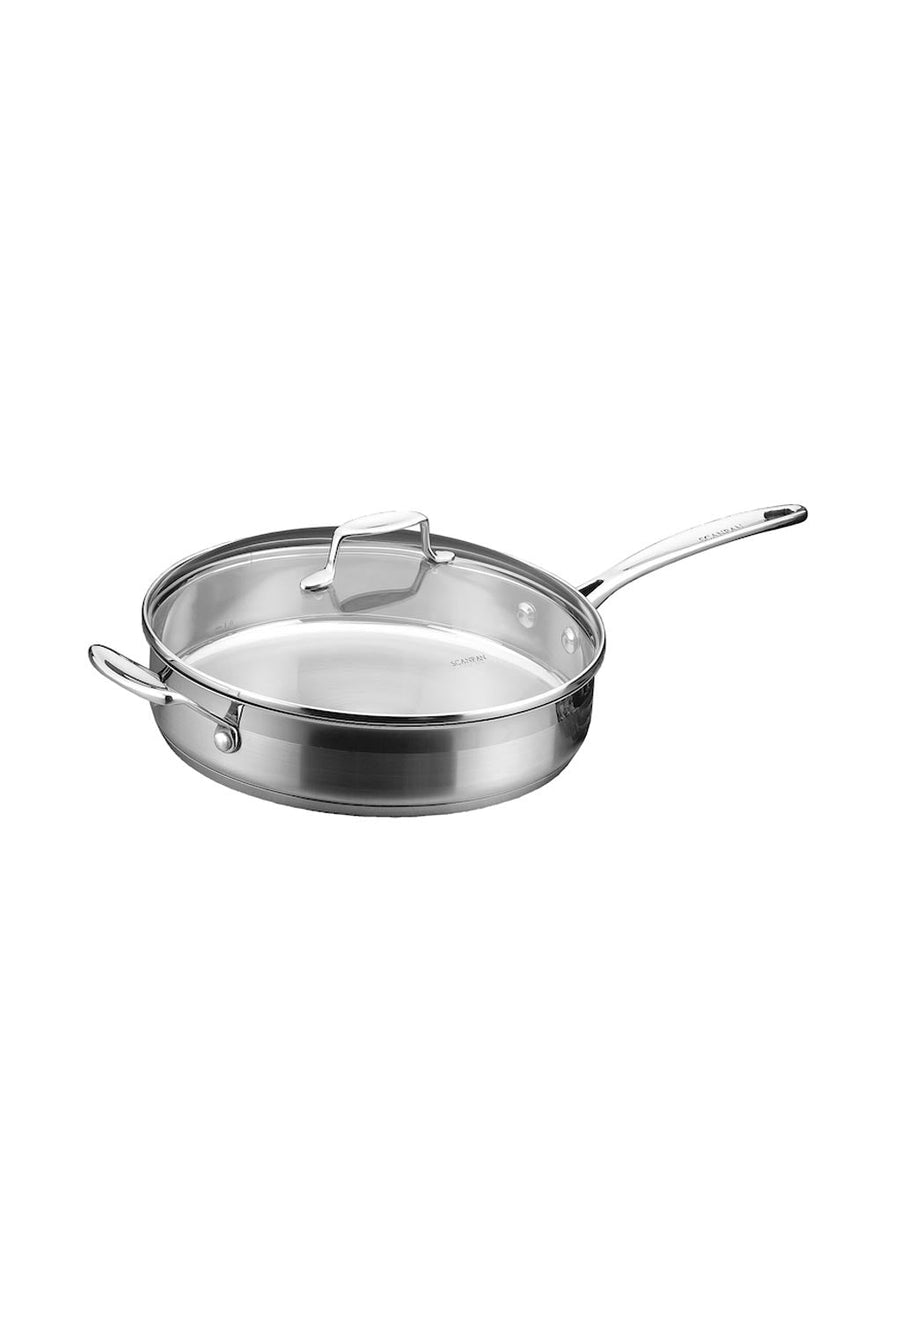 Scanpan Impact 28cm Saute pan with lid